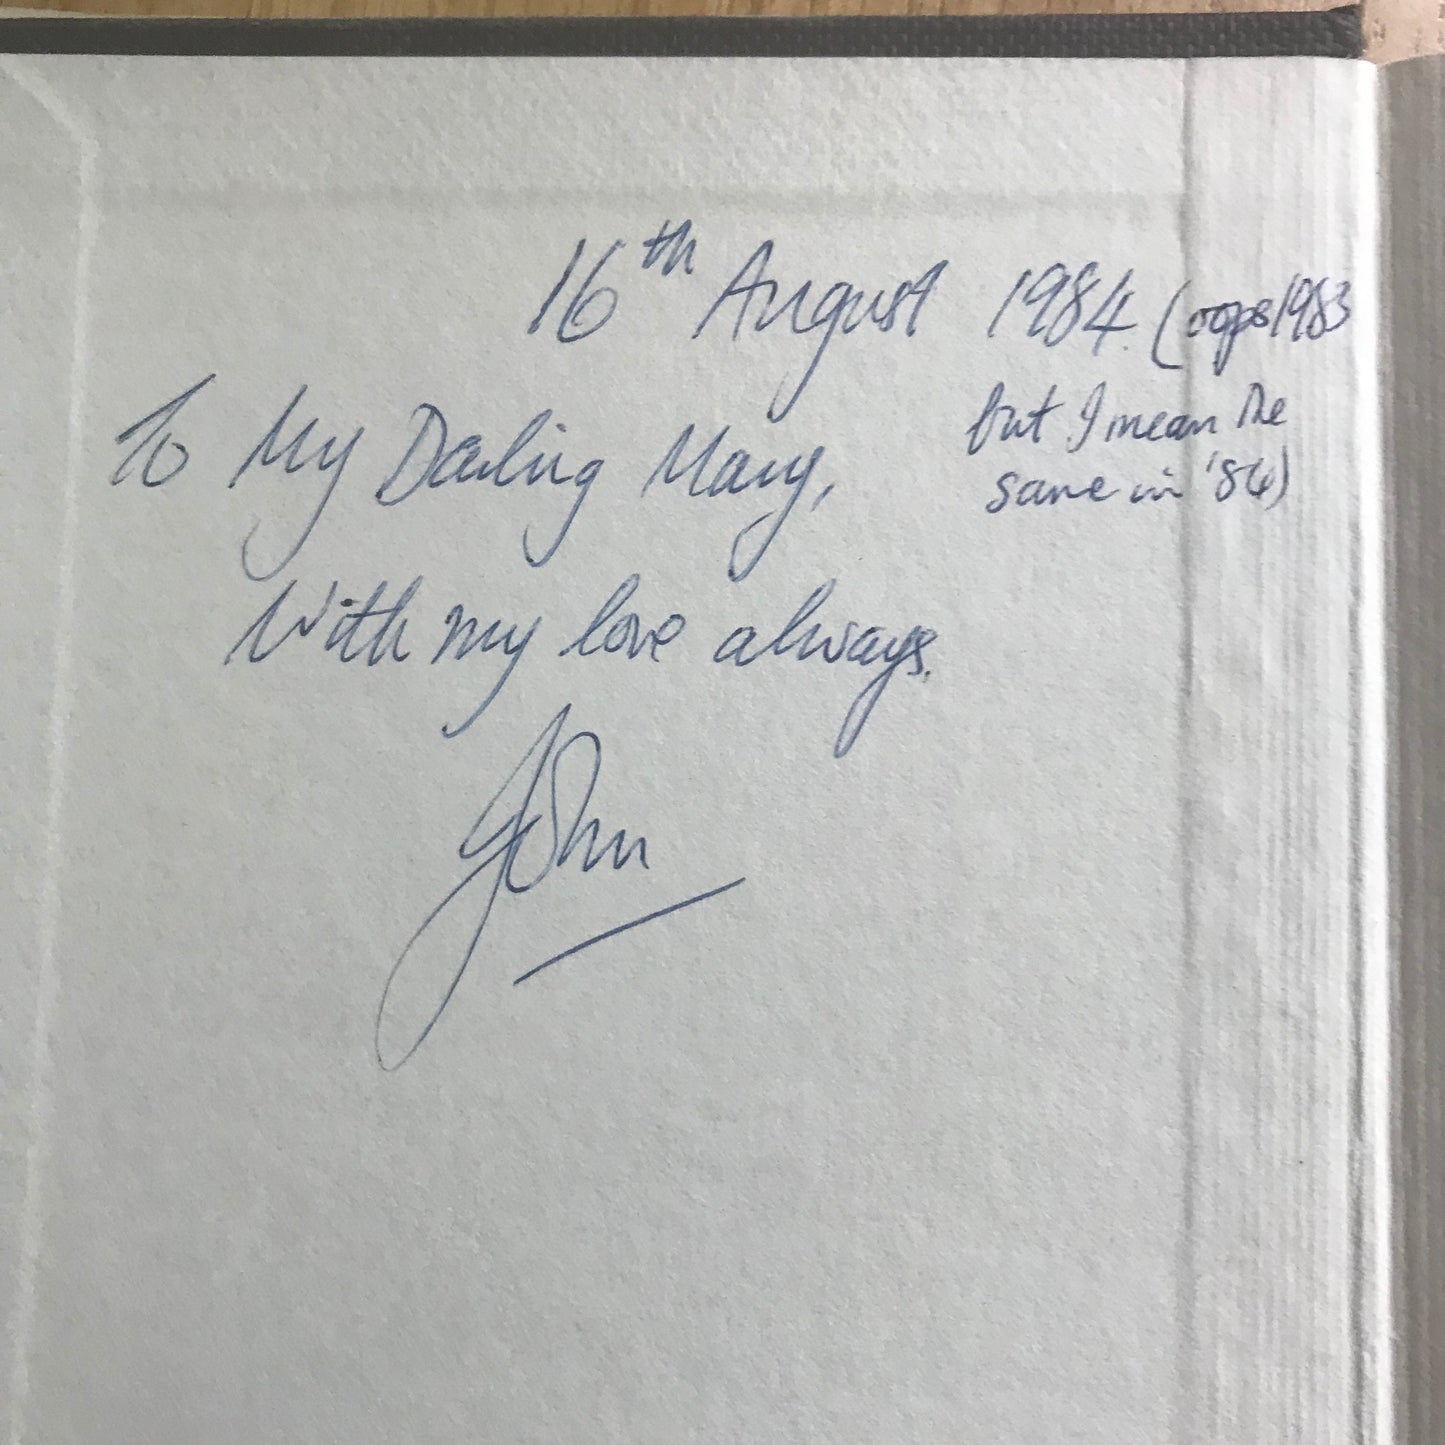 1983*1st* Jona Oberski A Childhood (Hodder and Stoughton) LP